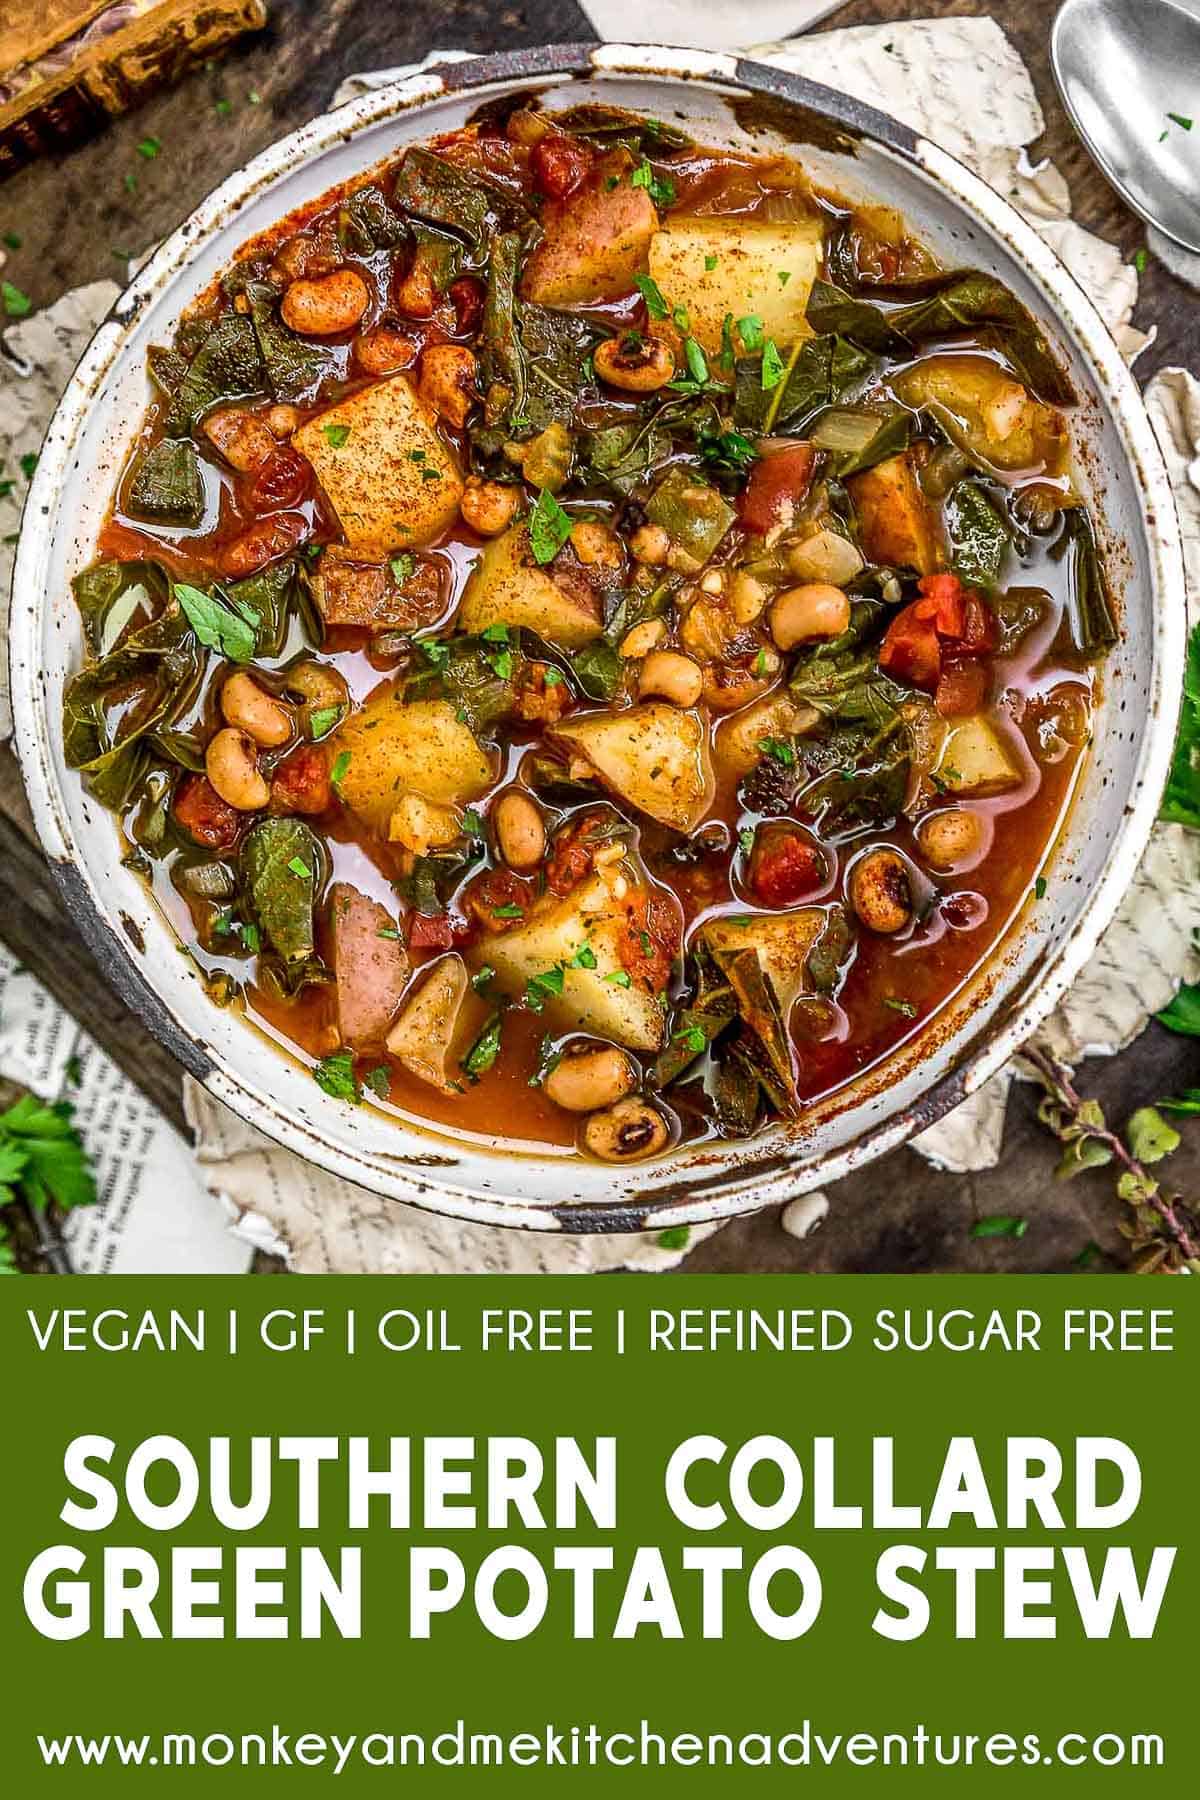 Southern Collard Green Potato Stew with text description